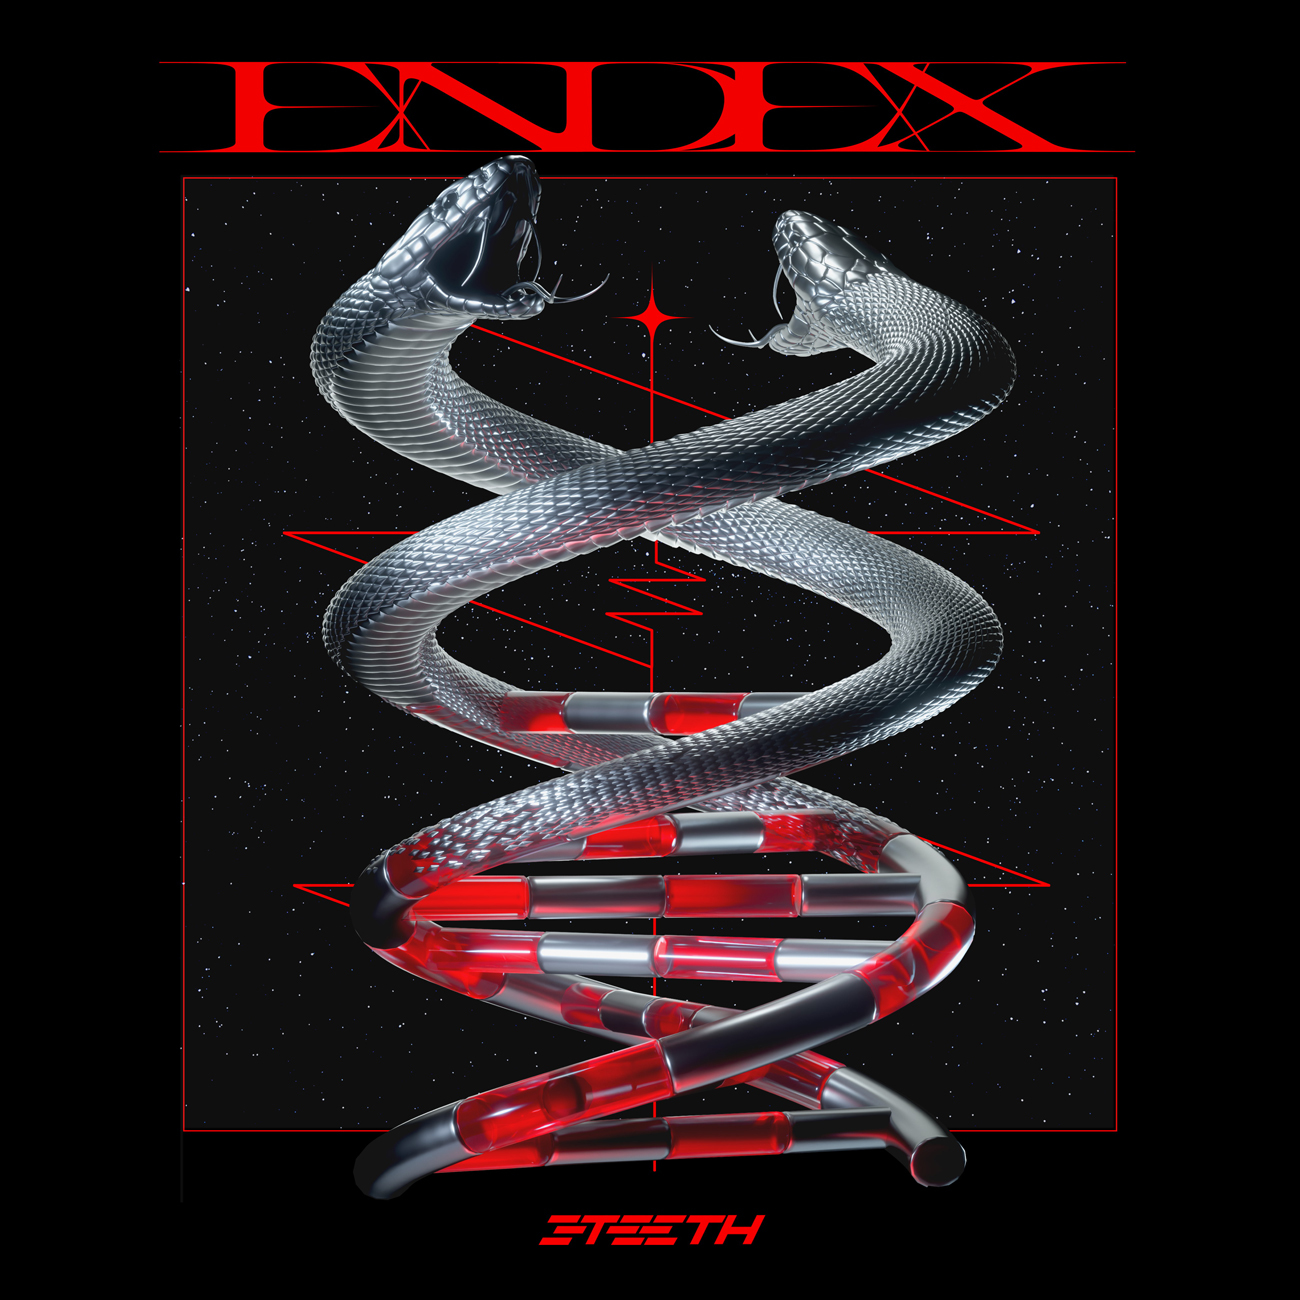 3teeth-endex-album-cover.jpg